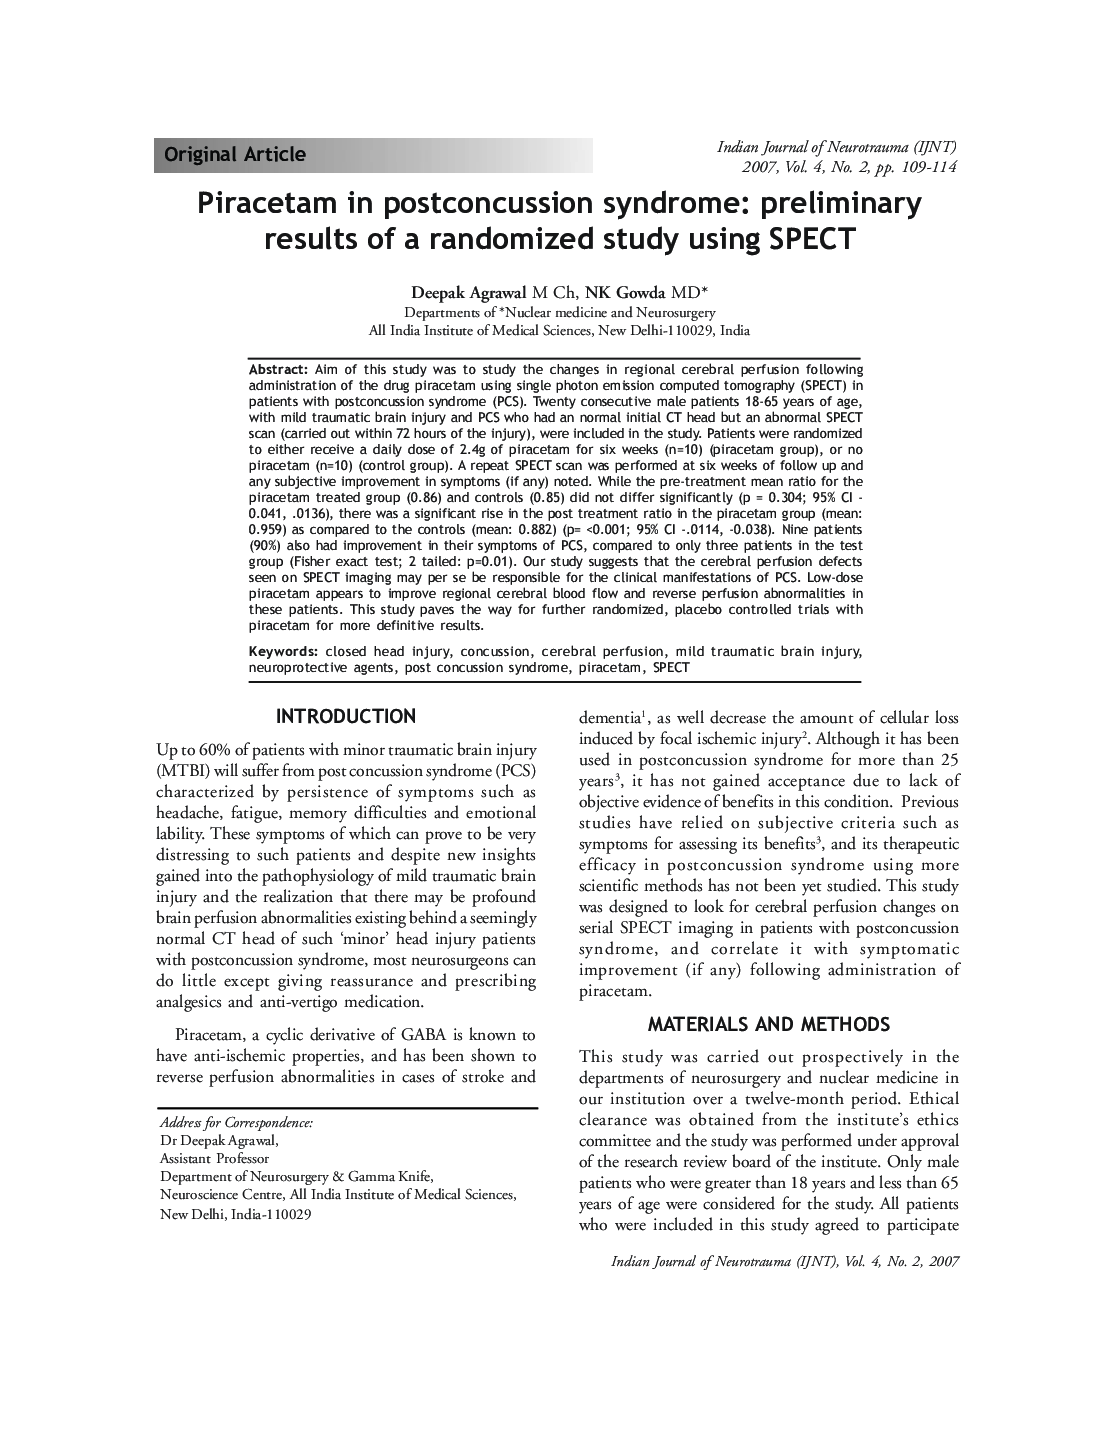 Piracetam in postconcussion syndrome: preliminary results of a randomized study using SPECT